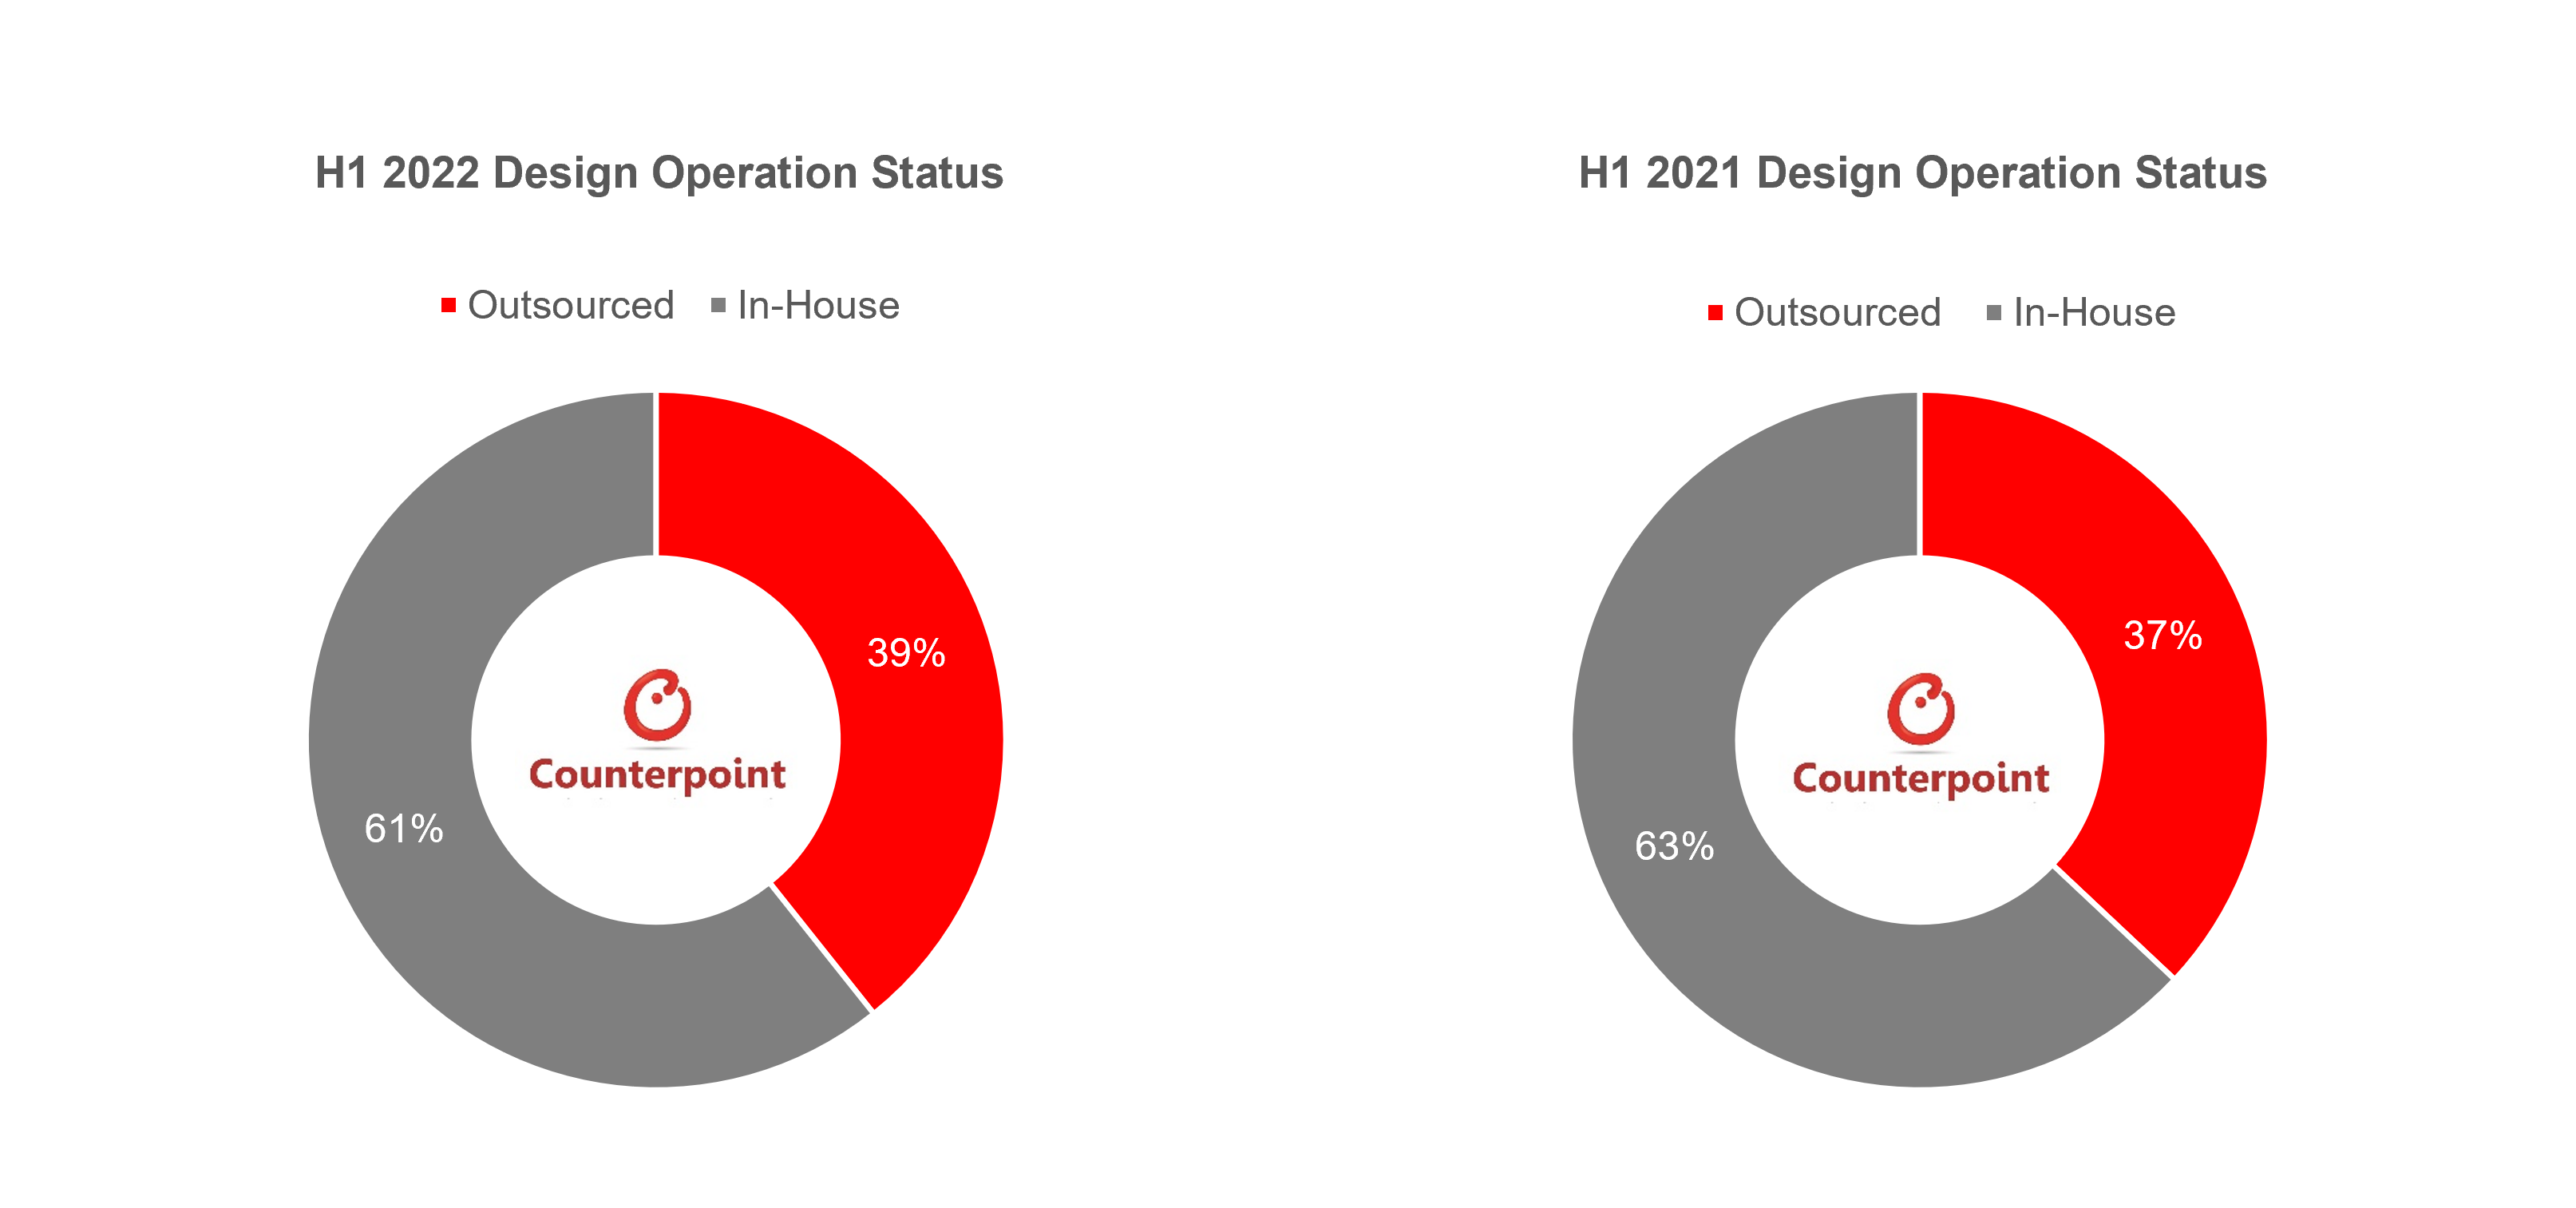 Global Smartphone Design Operation Status H1 2022